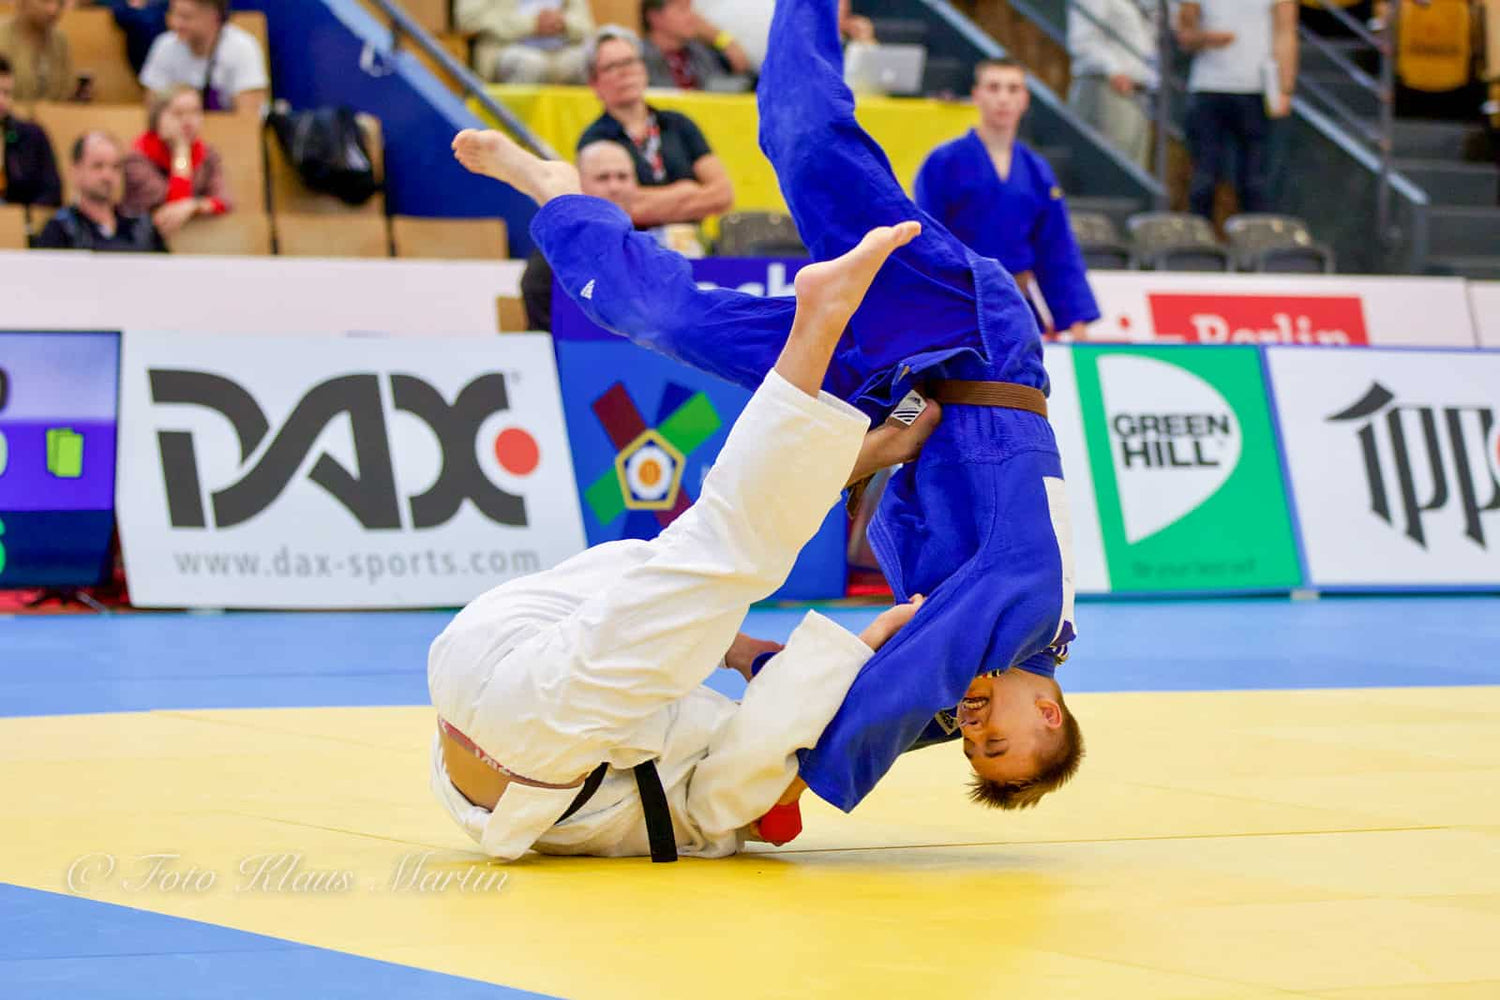 Judo martial art